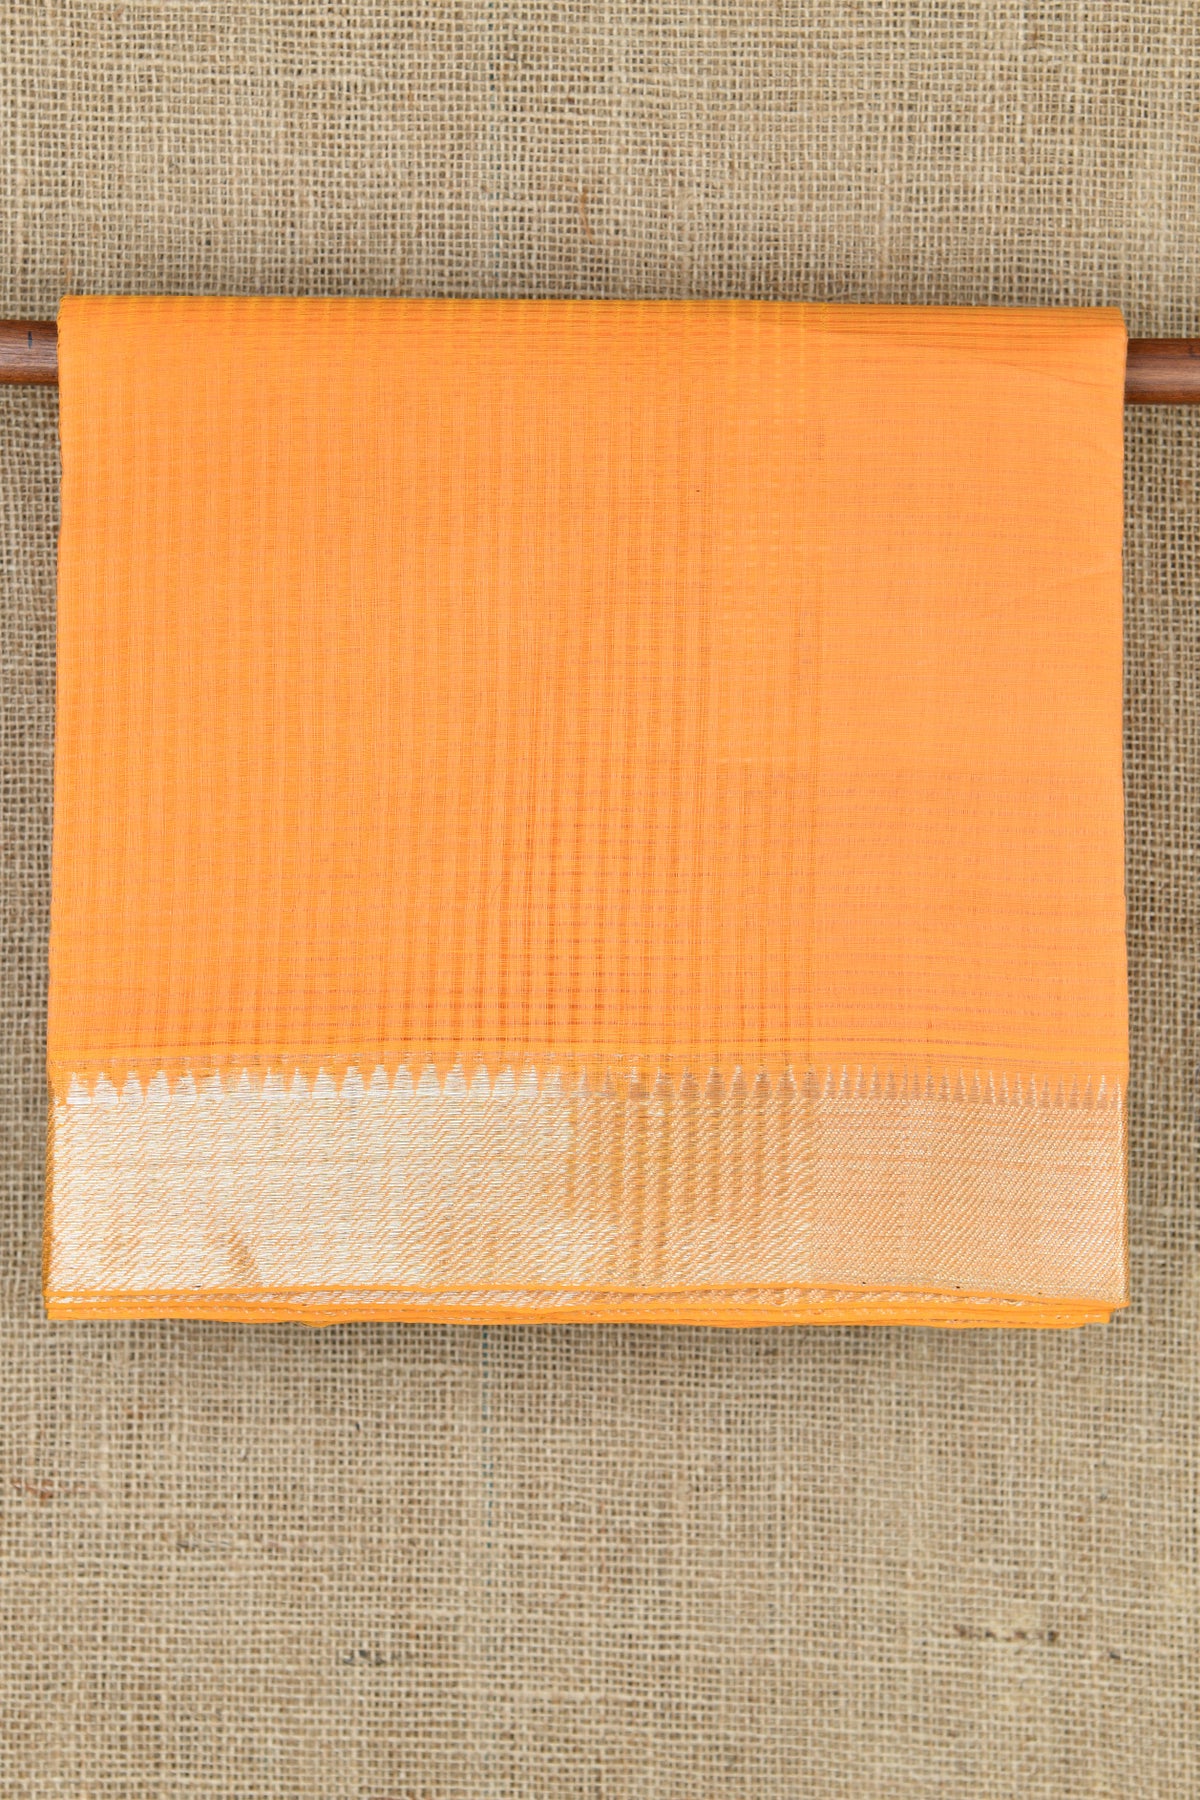 Temple Border Checked Design Fanta Orange Mangalagiri Cotton Saree